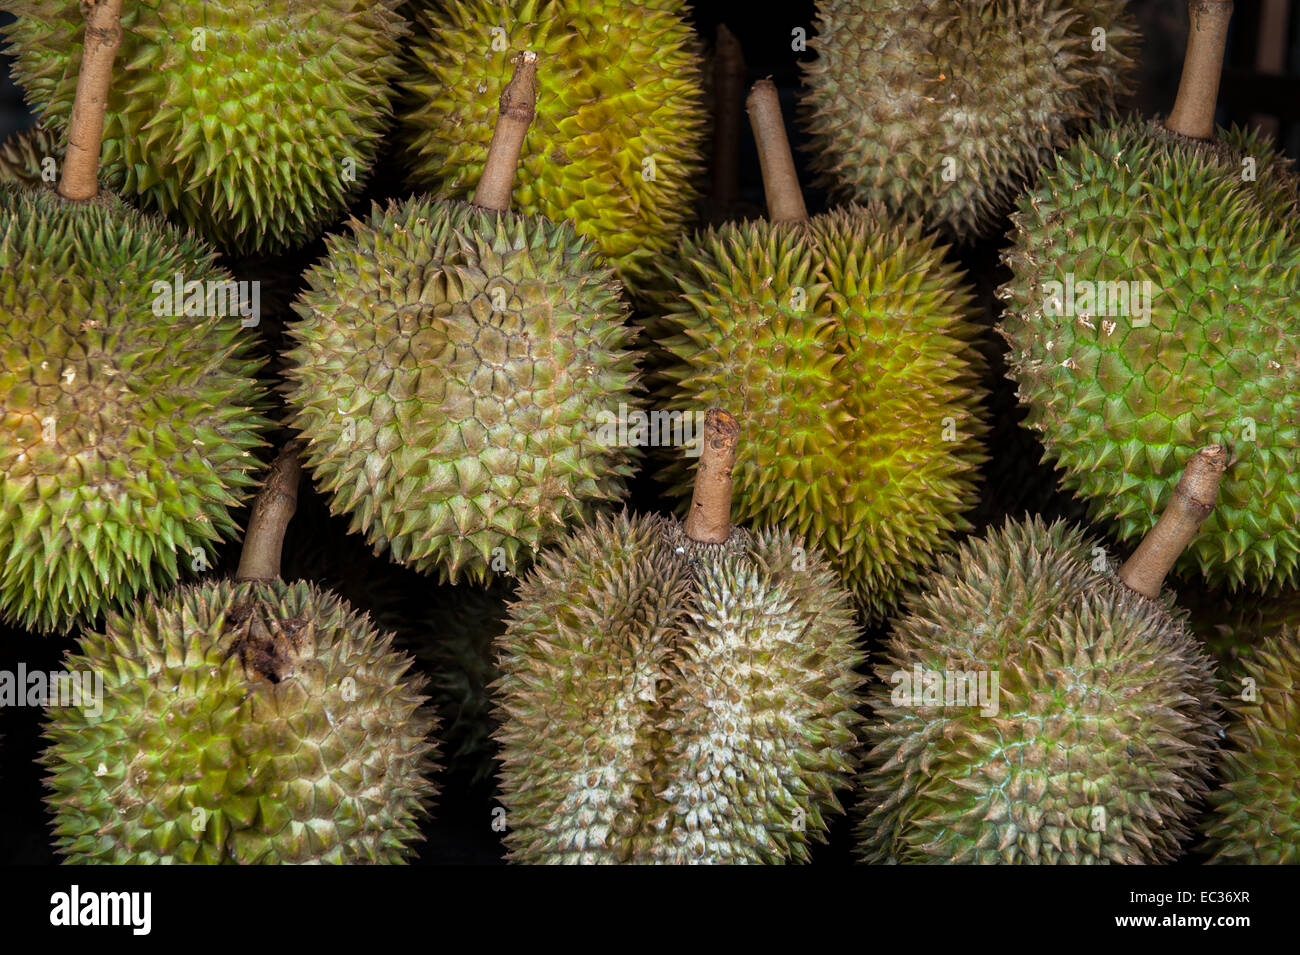 Durian fruit in market Stock Photo